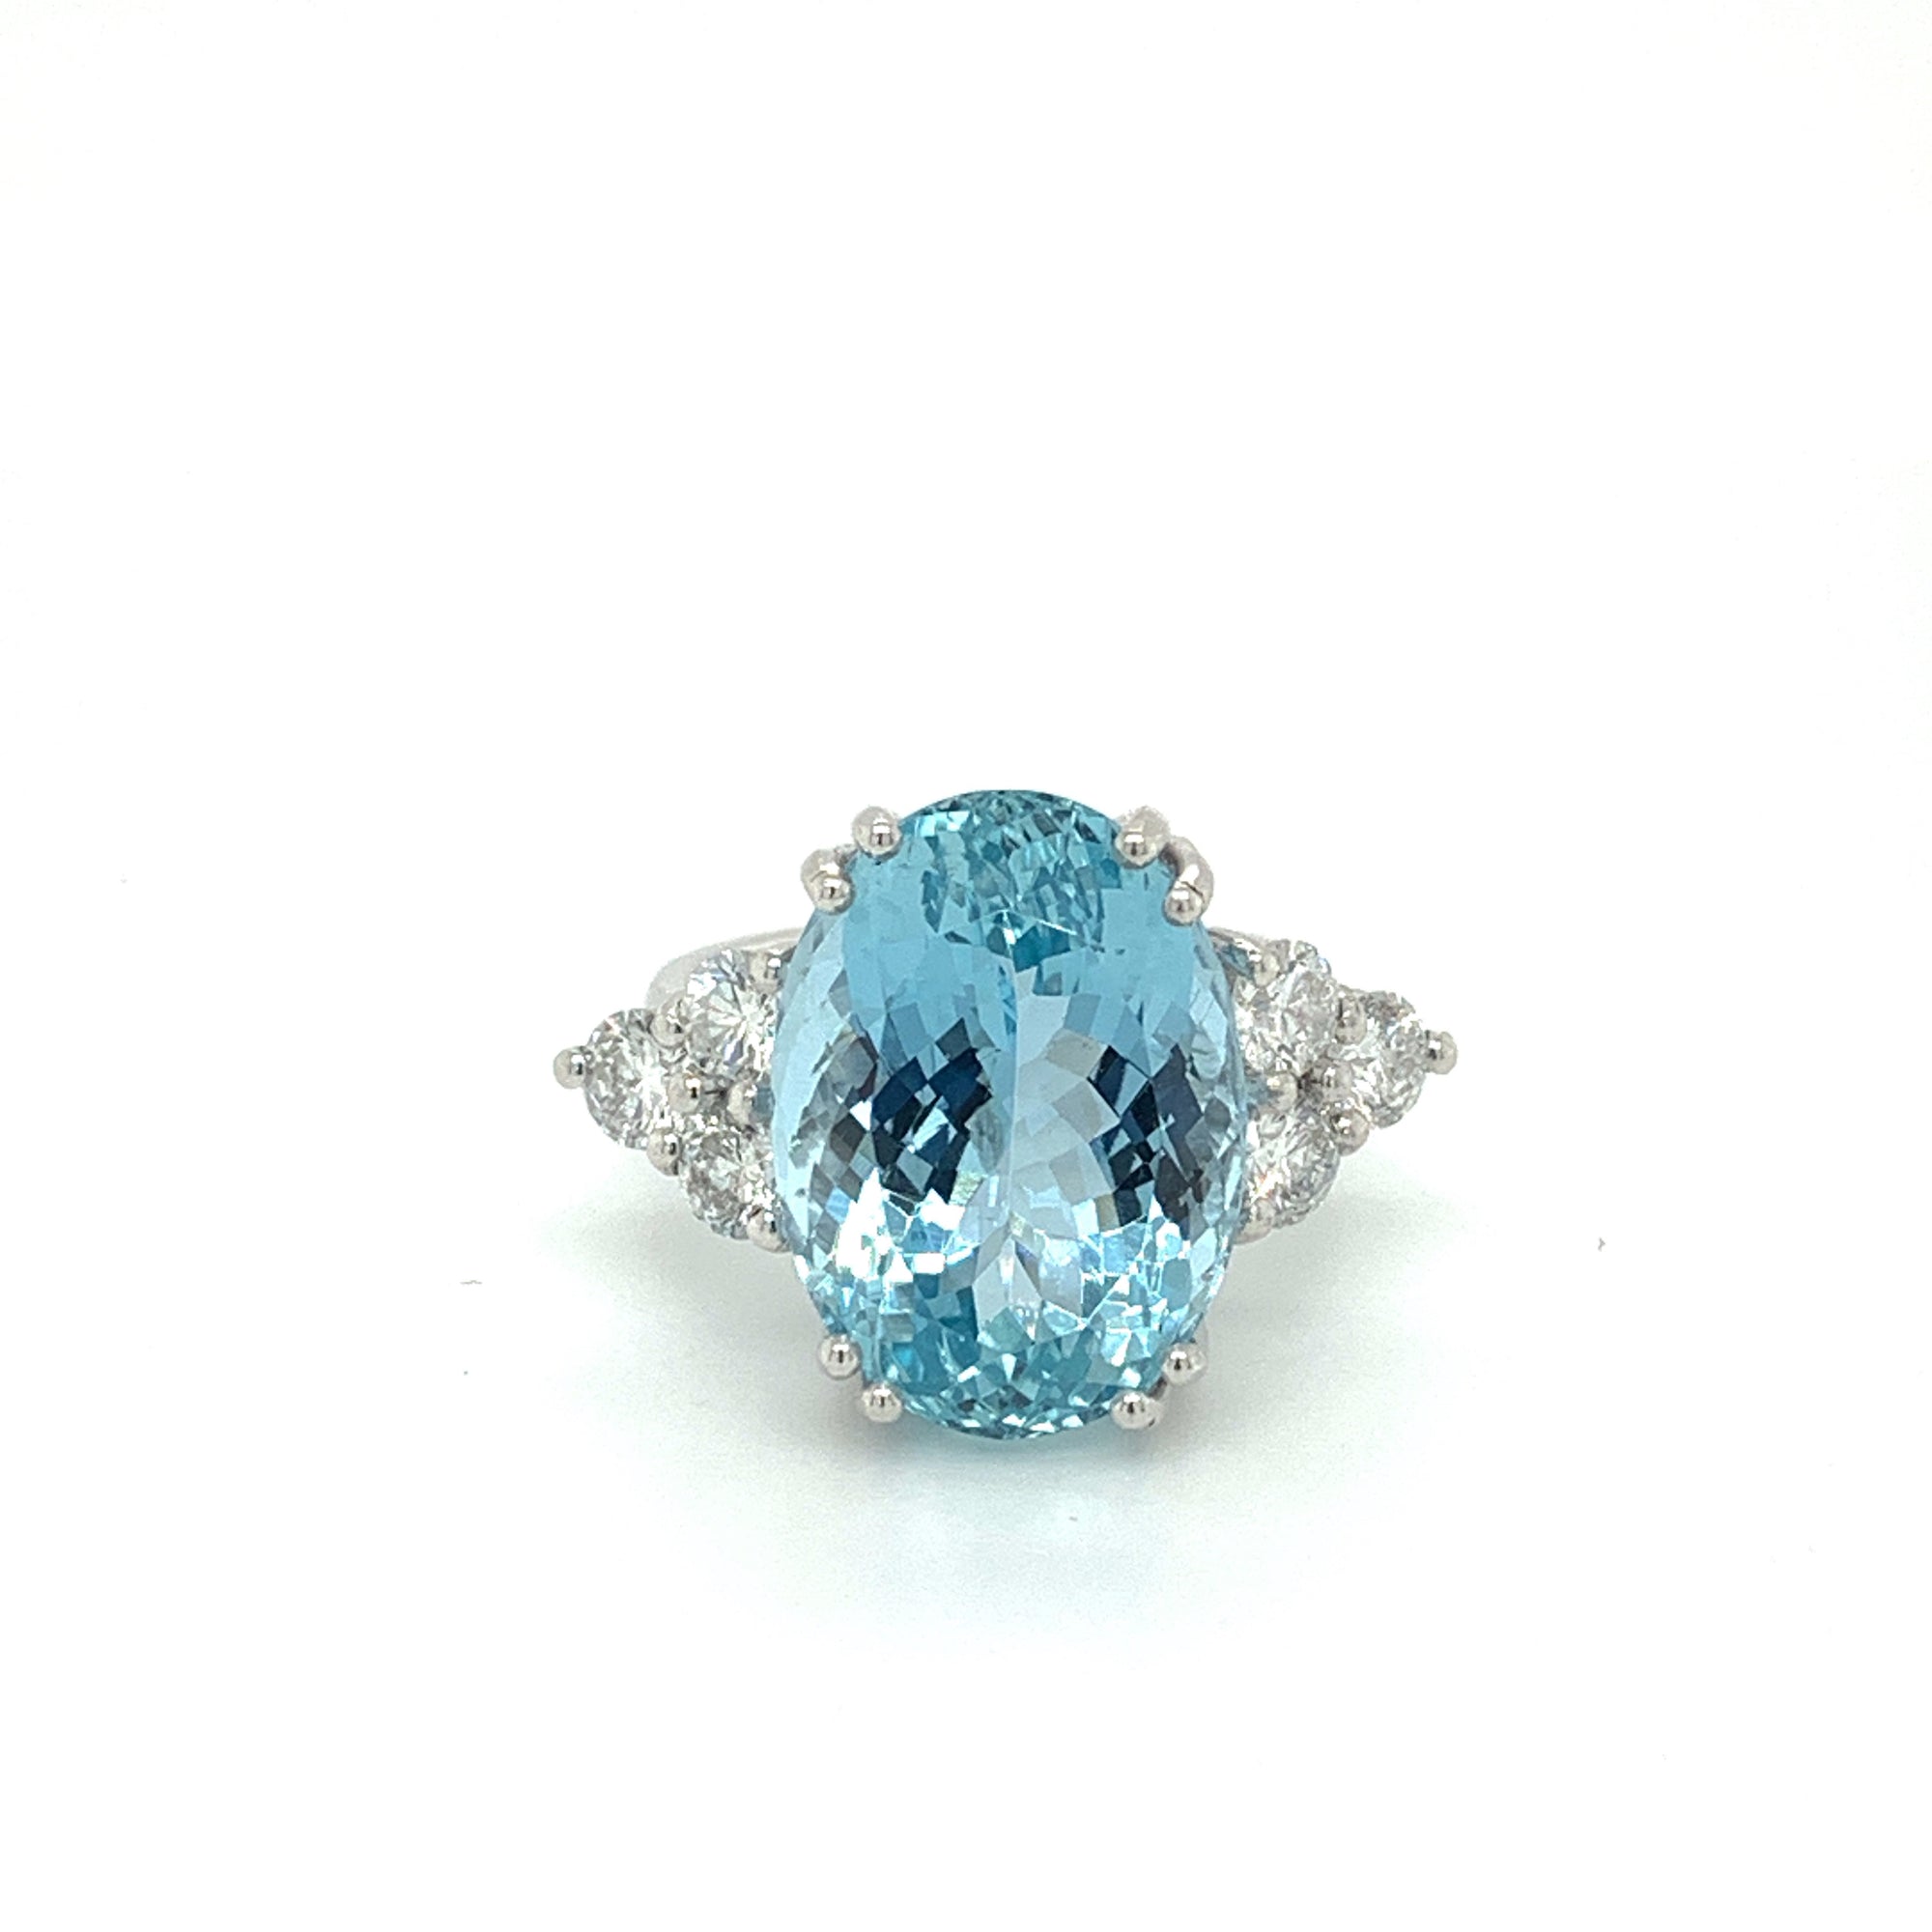 5.84ct aquamarine & diamond cocktail ring, 18kt white gold, G/H colour, SI clarity